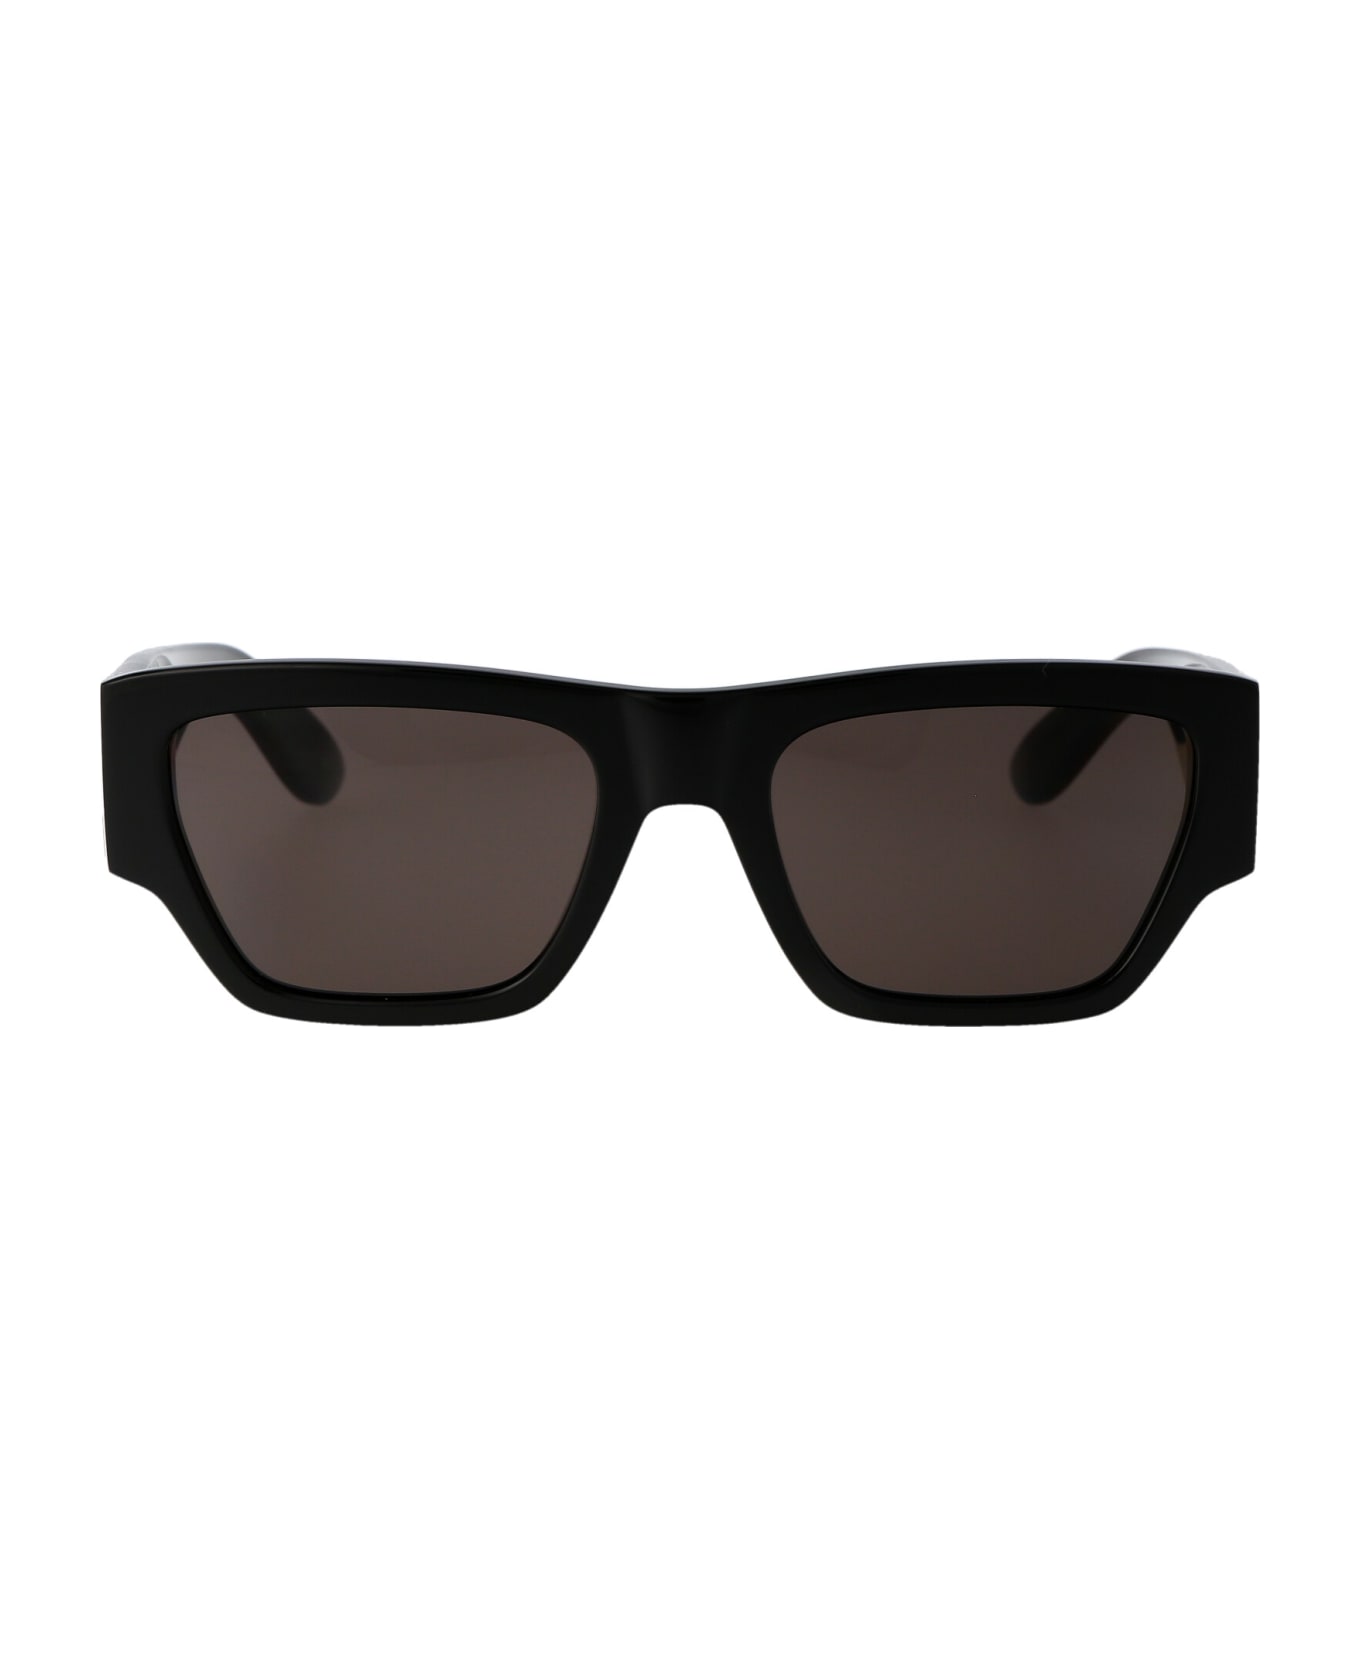 Alexander McQueen Eyewear Am0393s Sunglasses - 001 BLACK BLACK GREY サングラス